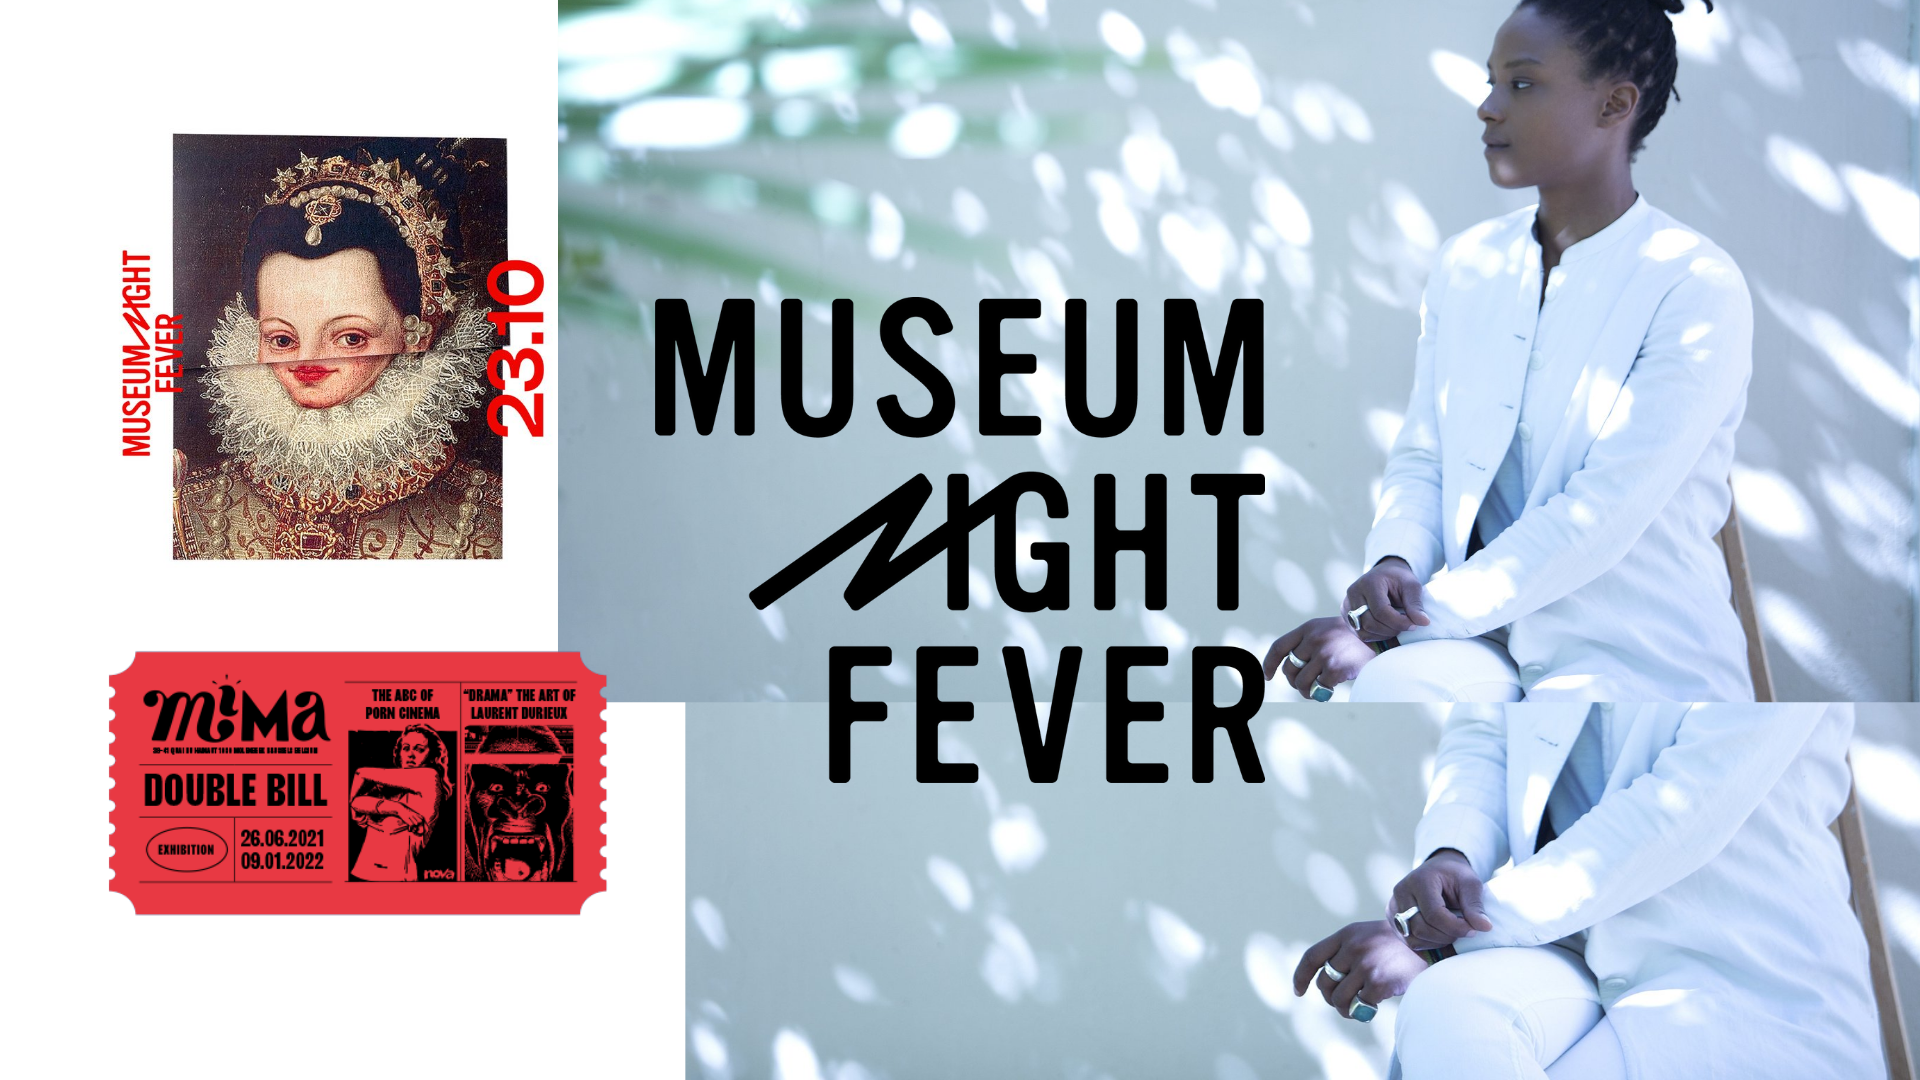 1920px x 1080px - Museum Night Fever 2021 - Mima Museum